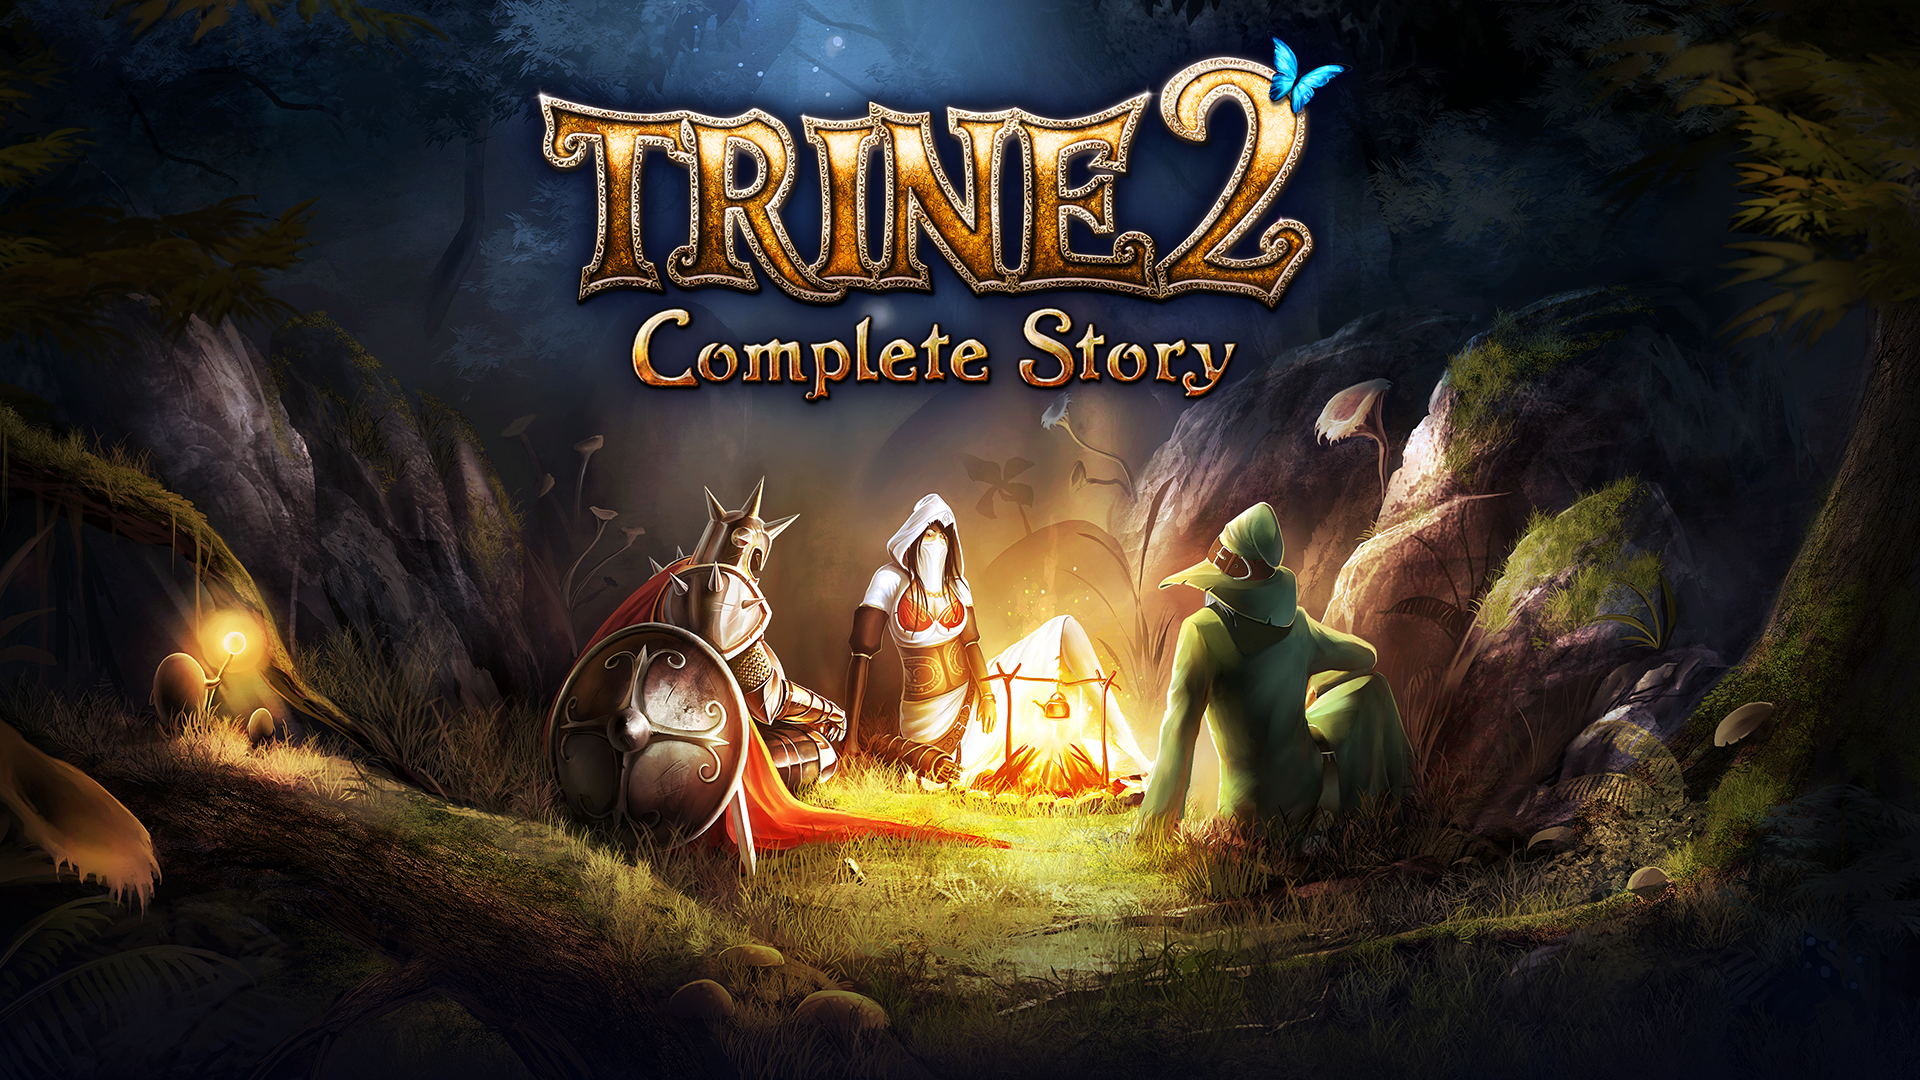 Complete this story. Trine 2. Trine 2: complete story. Trine 2 умения персонажей. Trine 2 complete story персонажи.